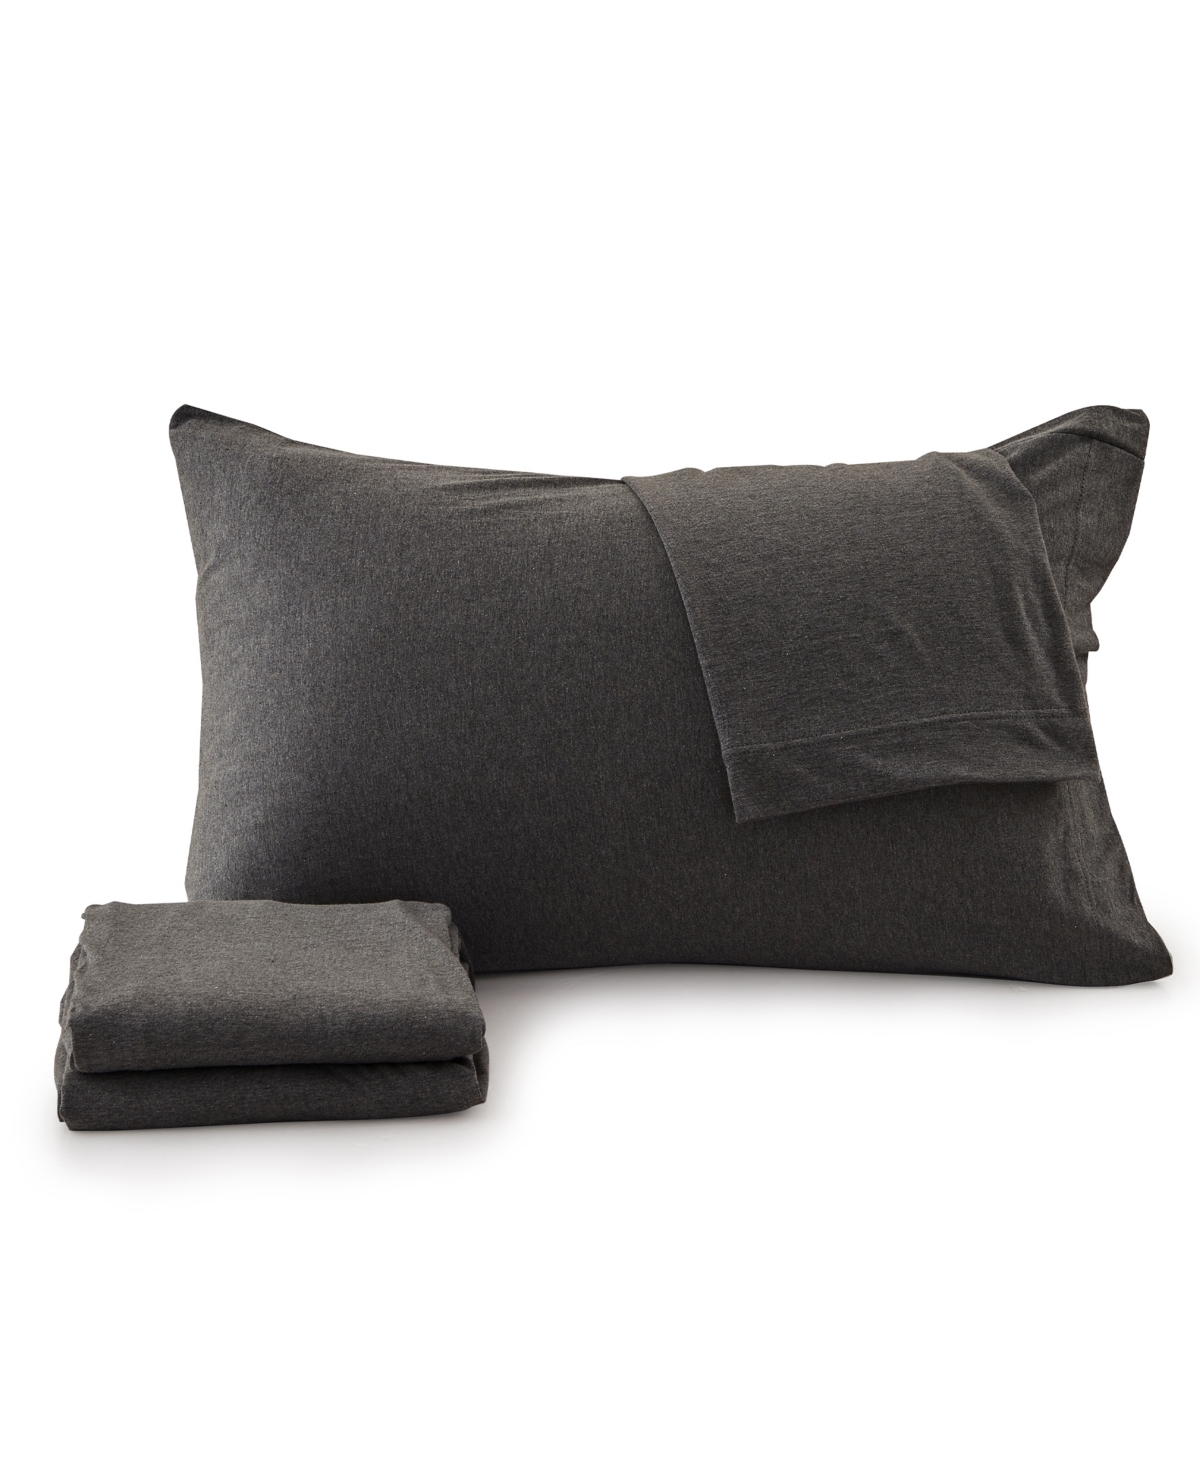 Premium Comforts Heathered Melange T-shirt Jersey Knit Cotton Blend 4 Piece Sheet Set, Twin Xl In Charcoal